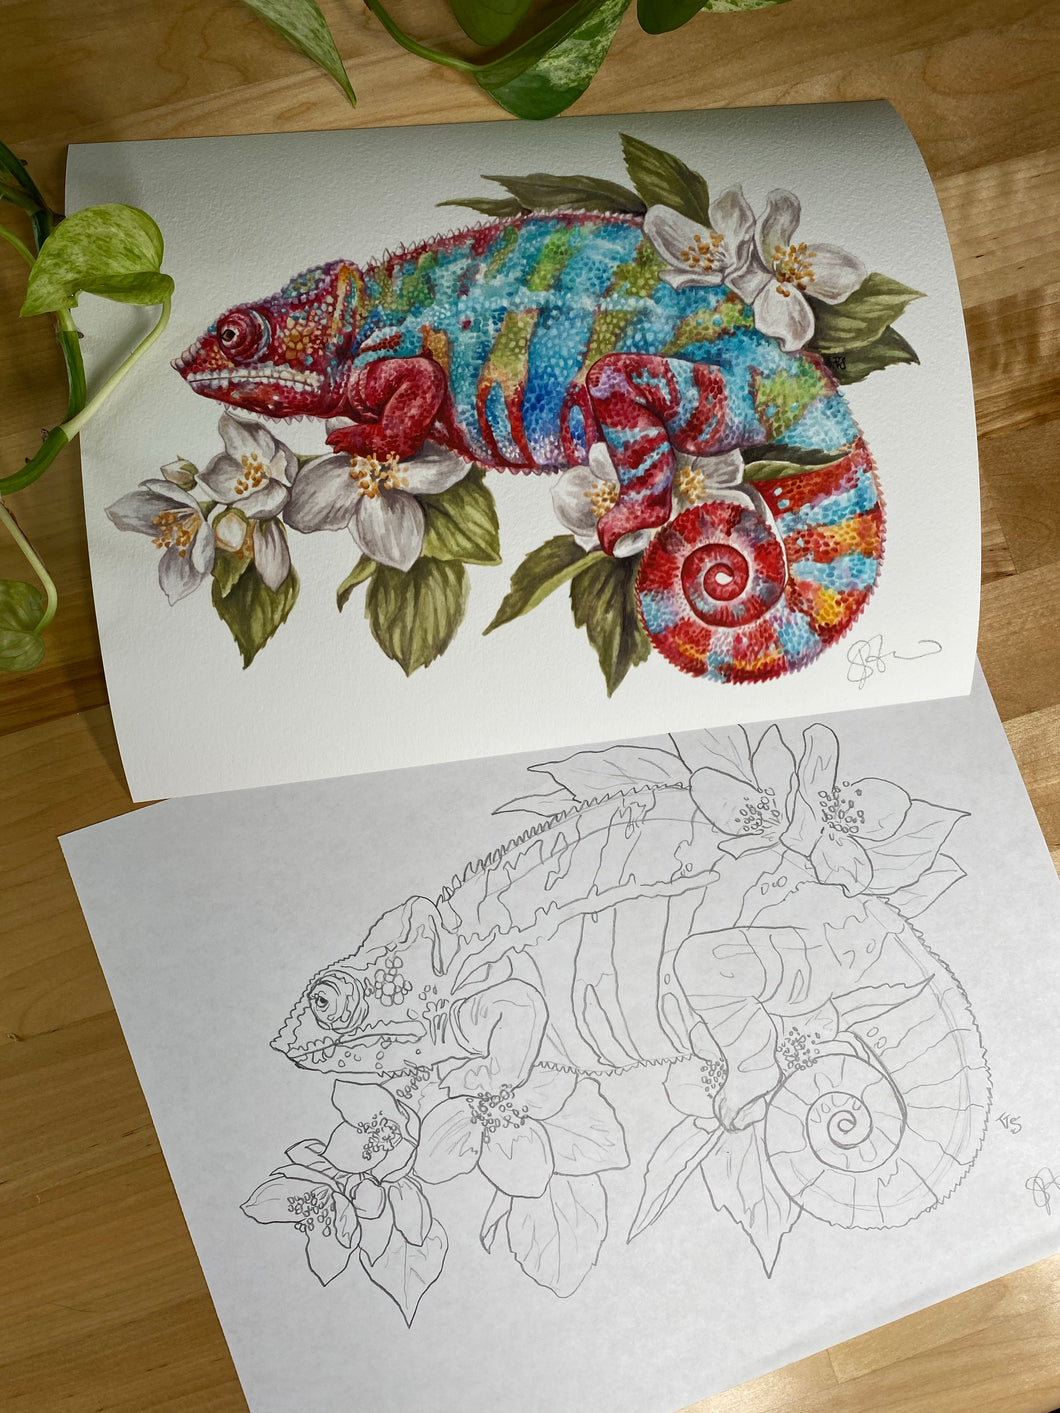 Chameleon original sketch and print